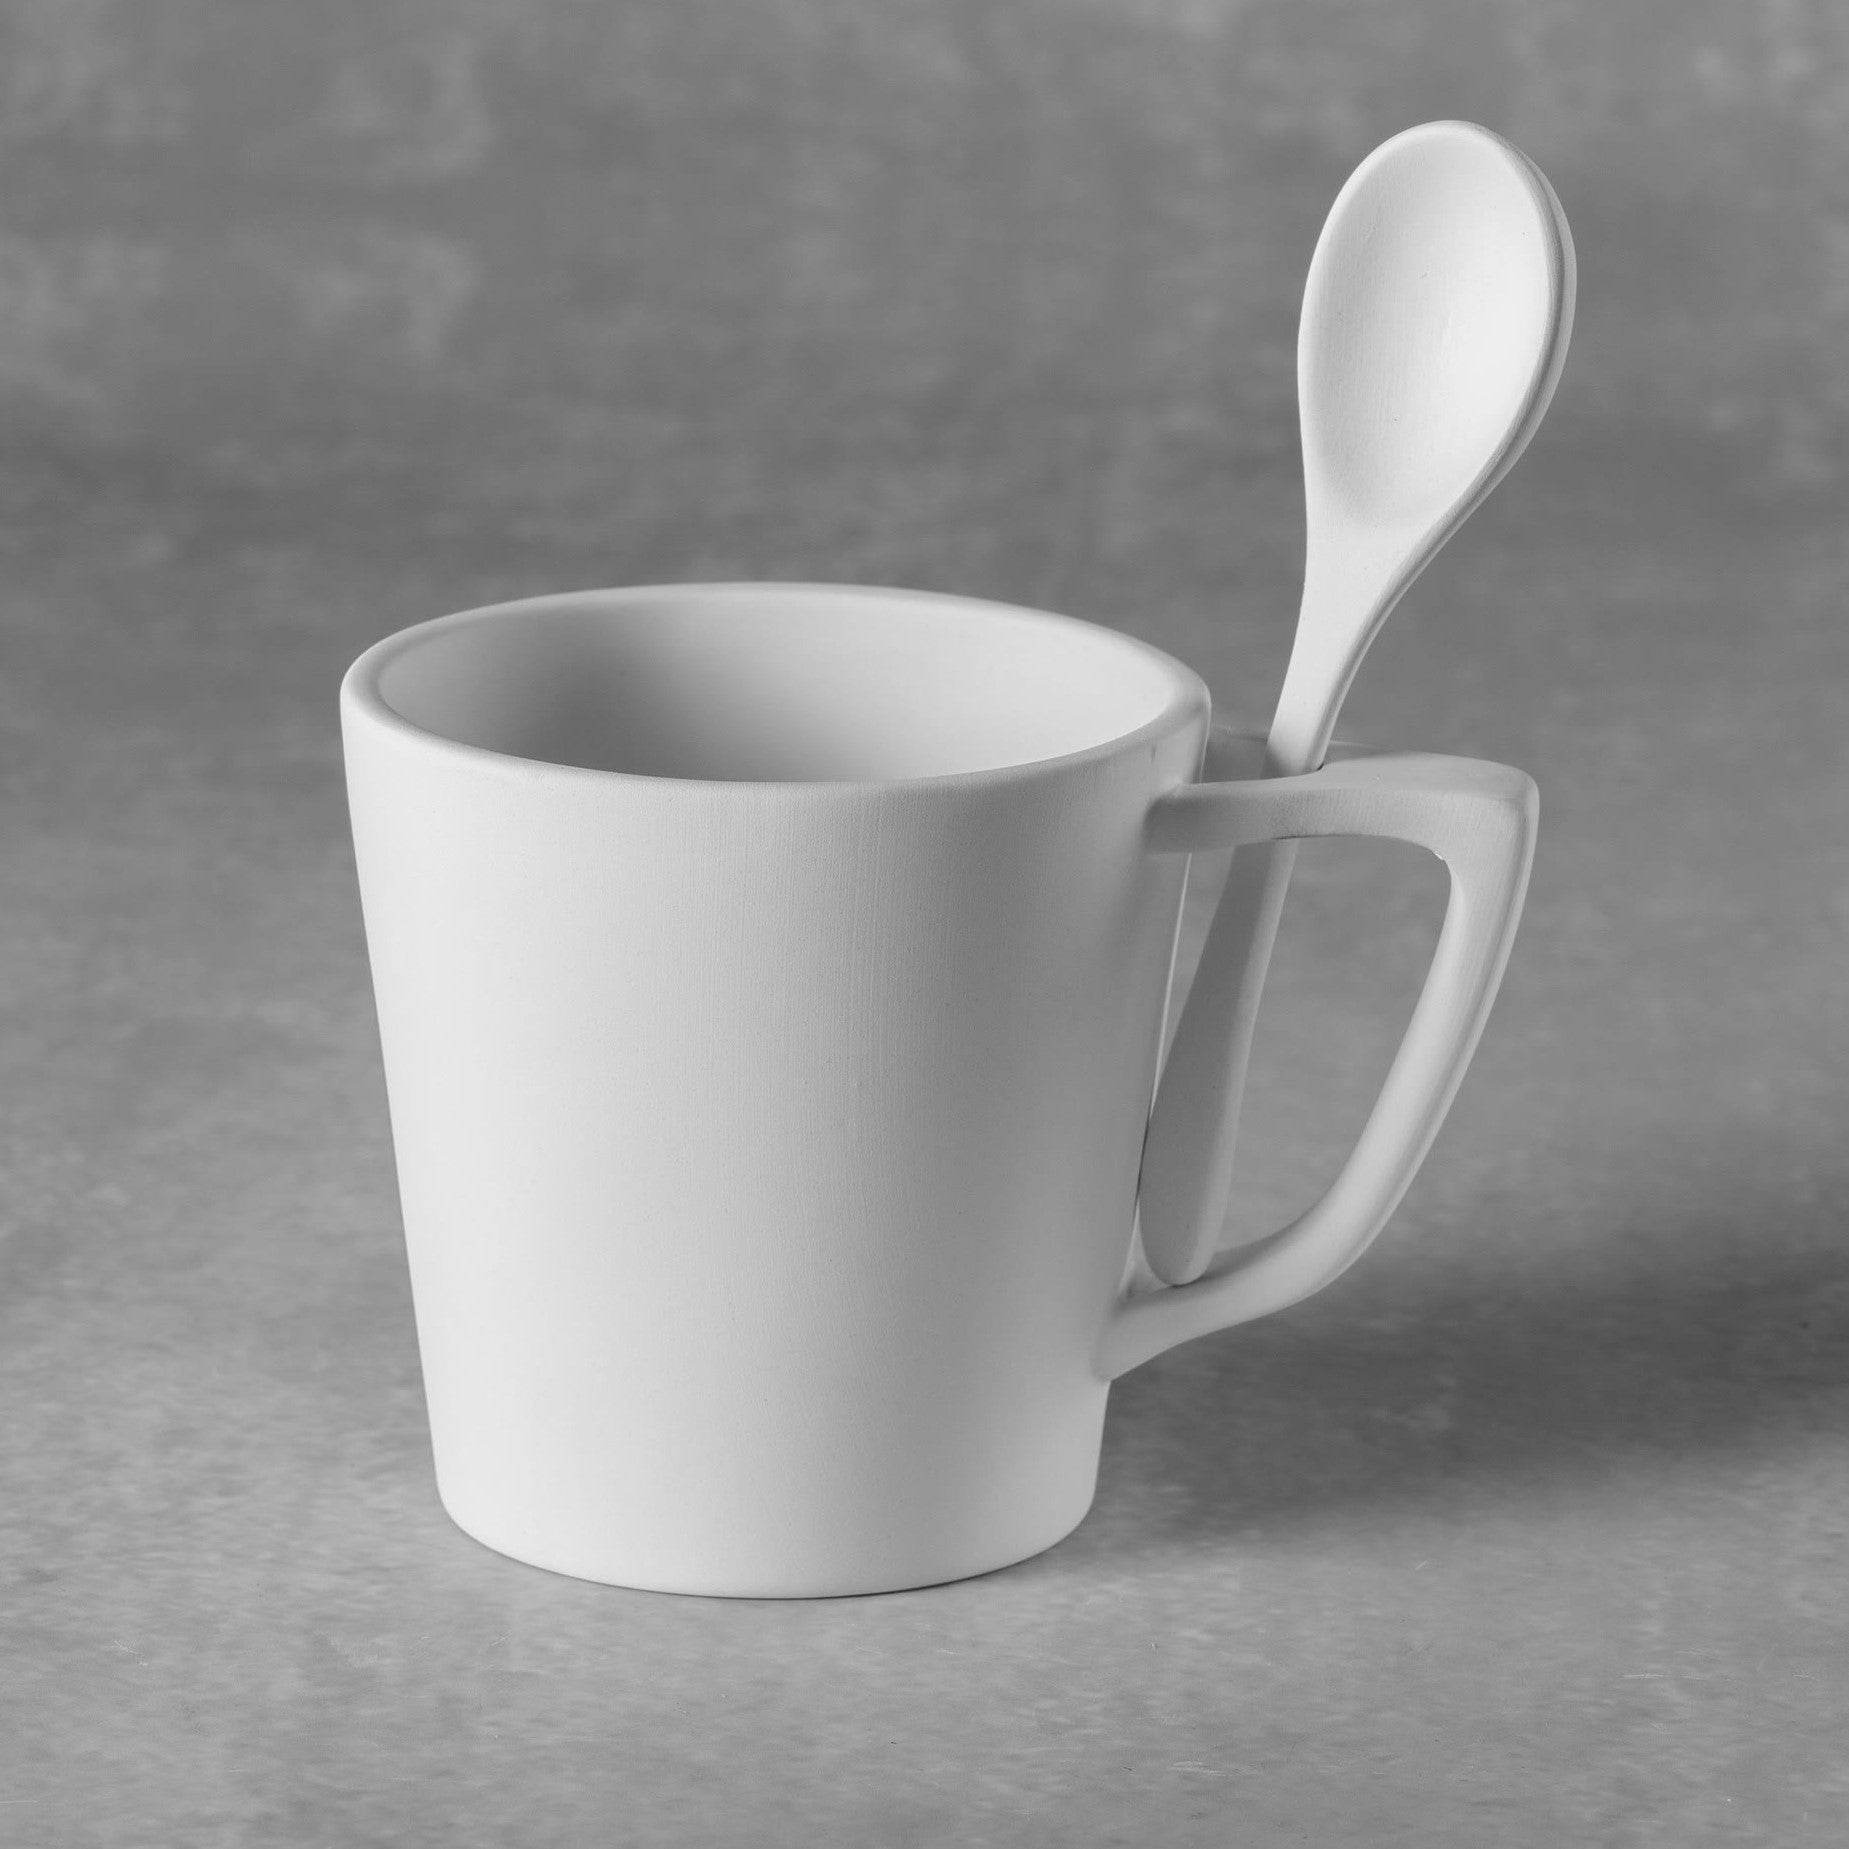 DB27156 Snack Mug with Spoon